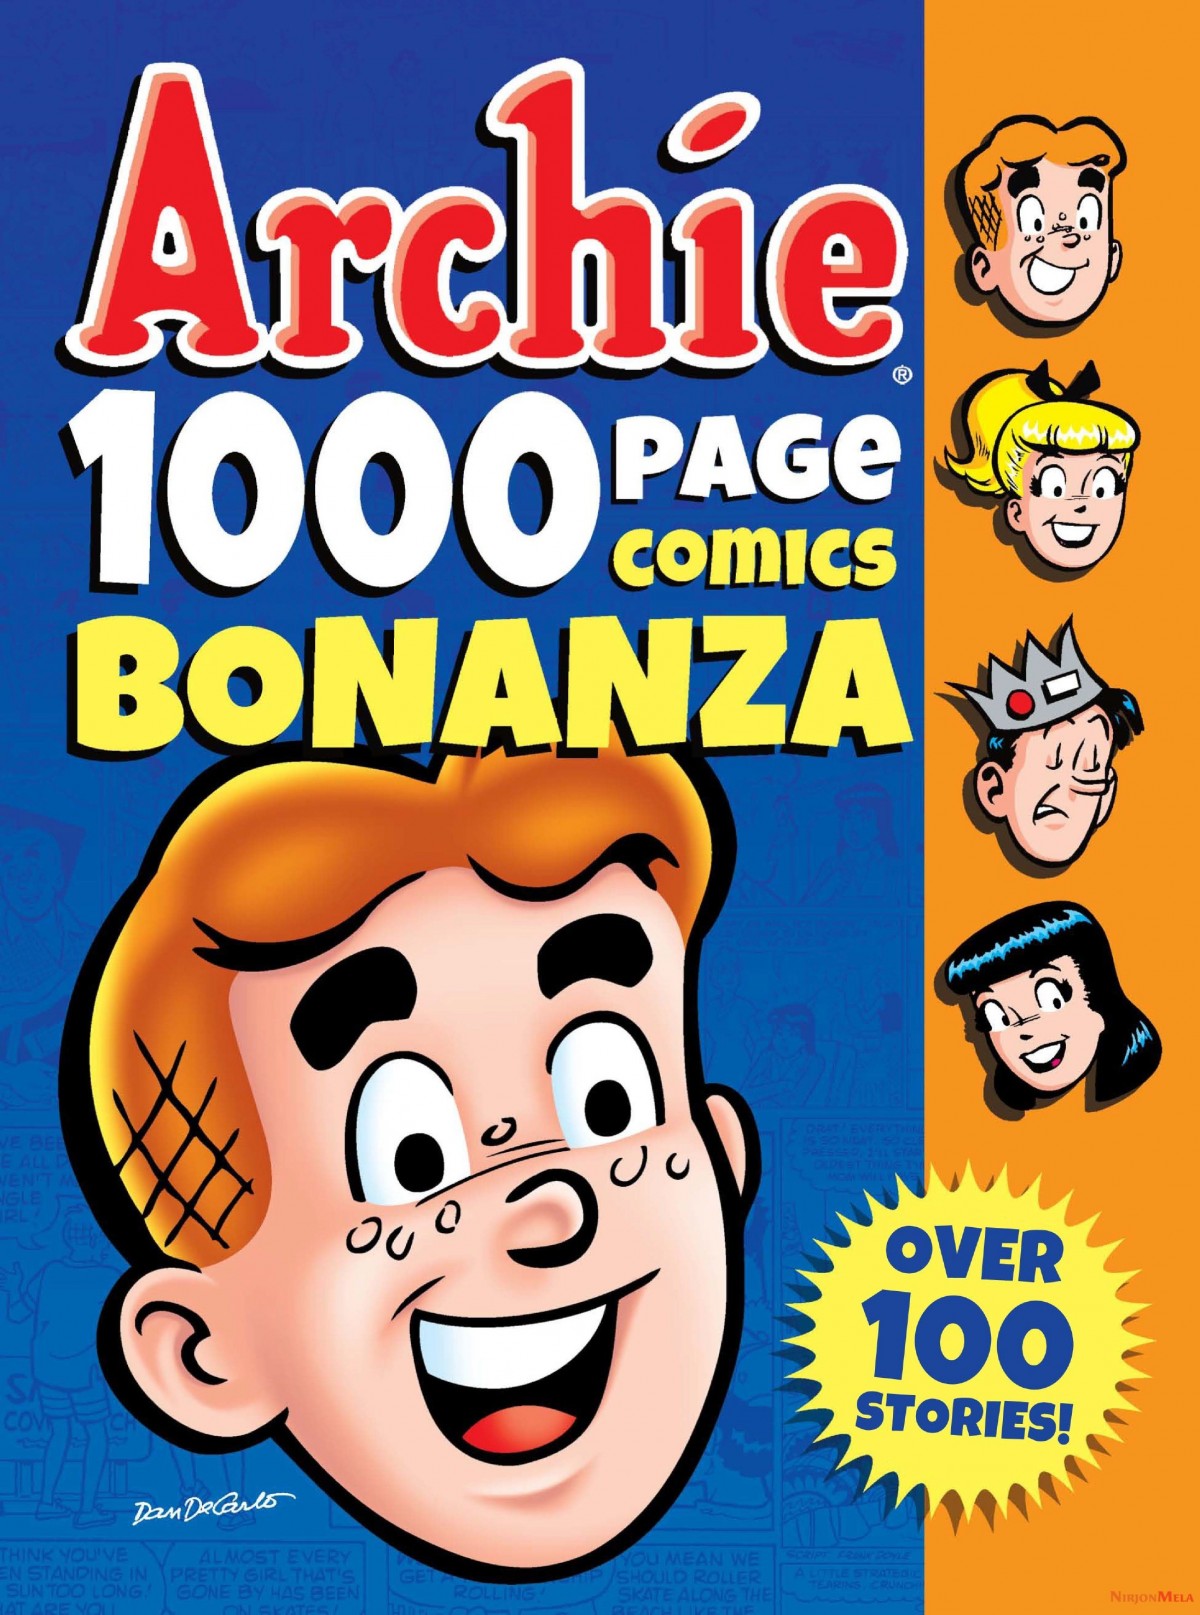 Archie-1000-Page-Comics-Bonanza-000.jpg